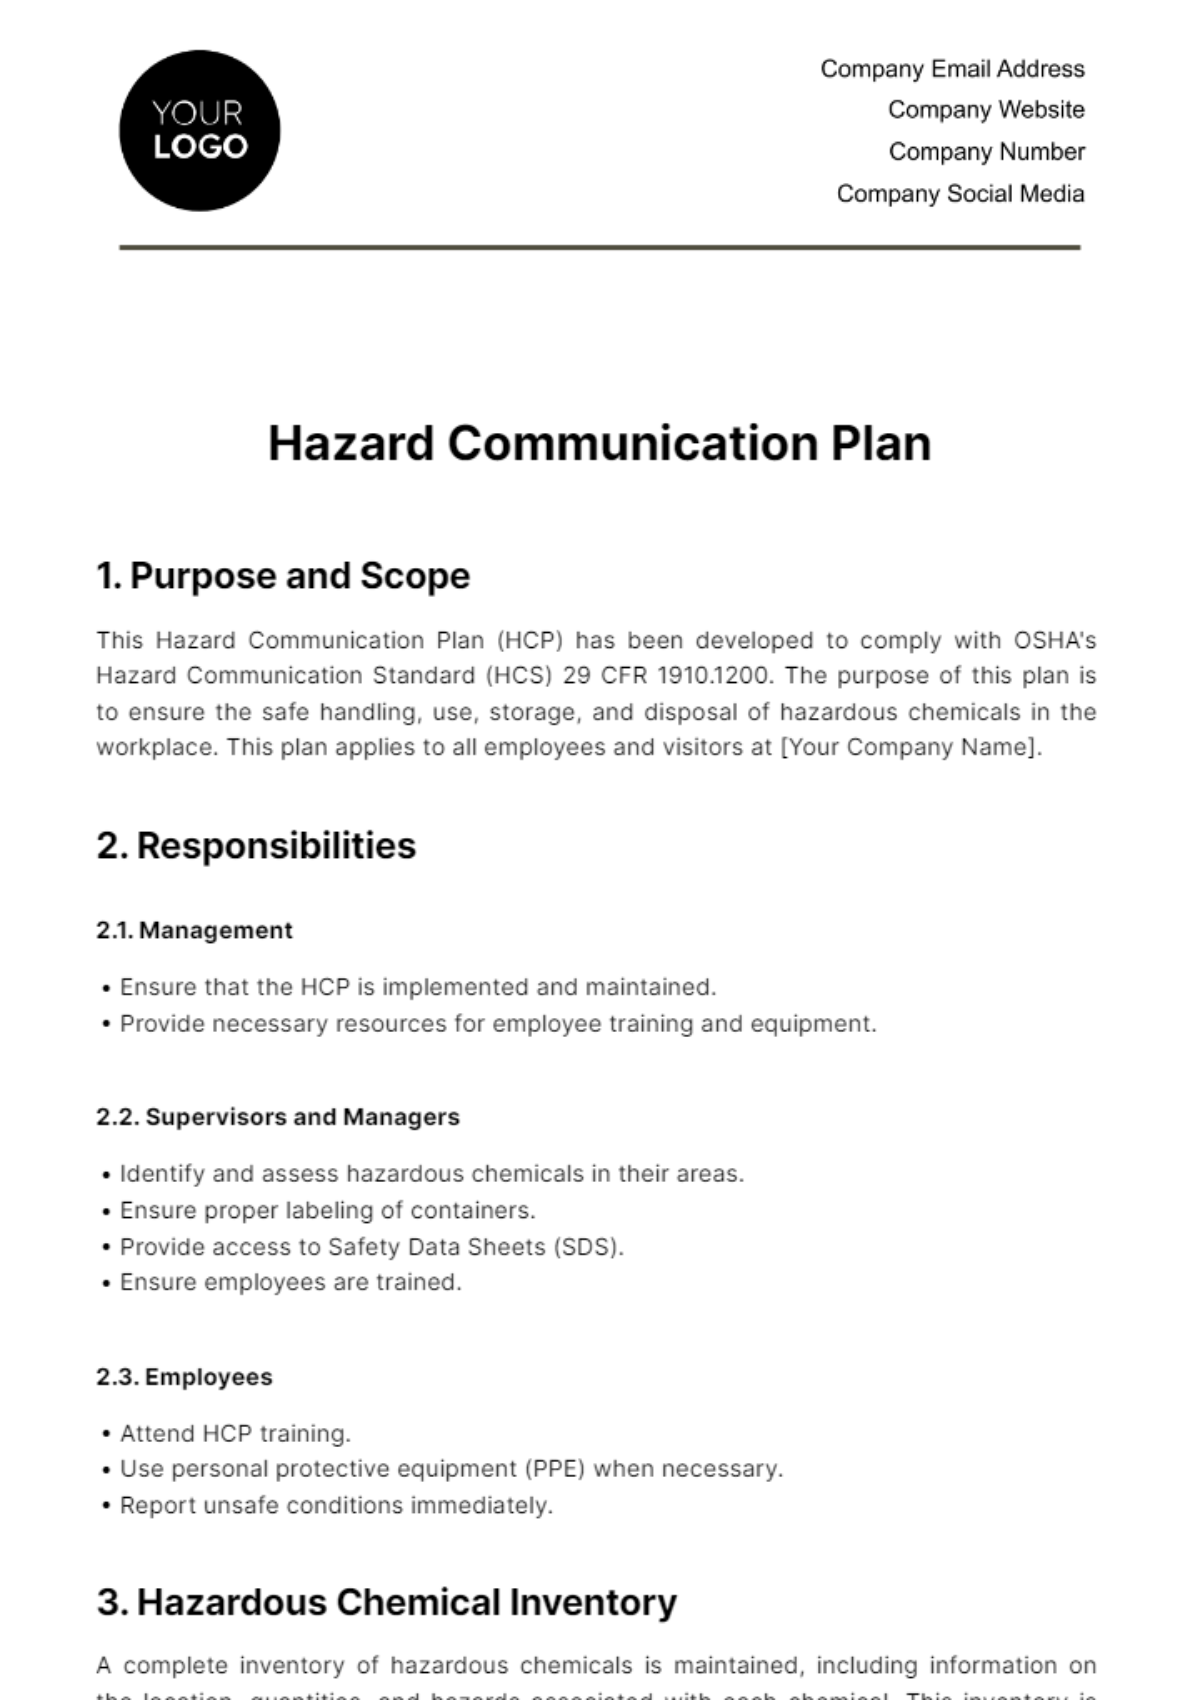 Free Hazard Communication Plan HR Template